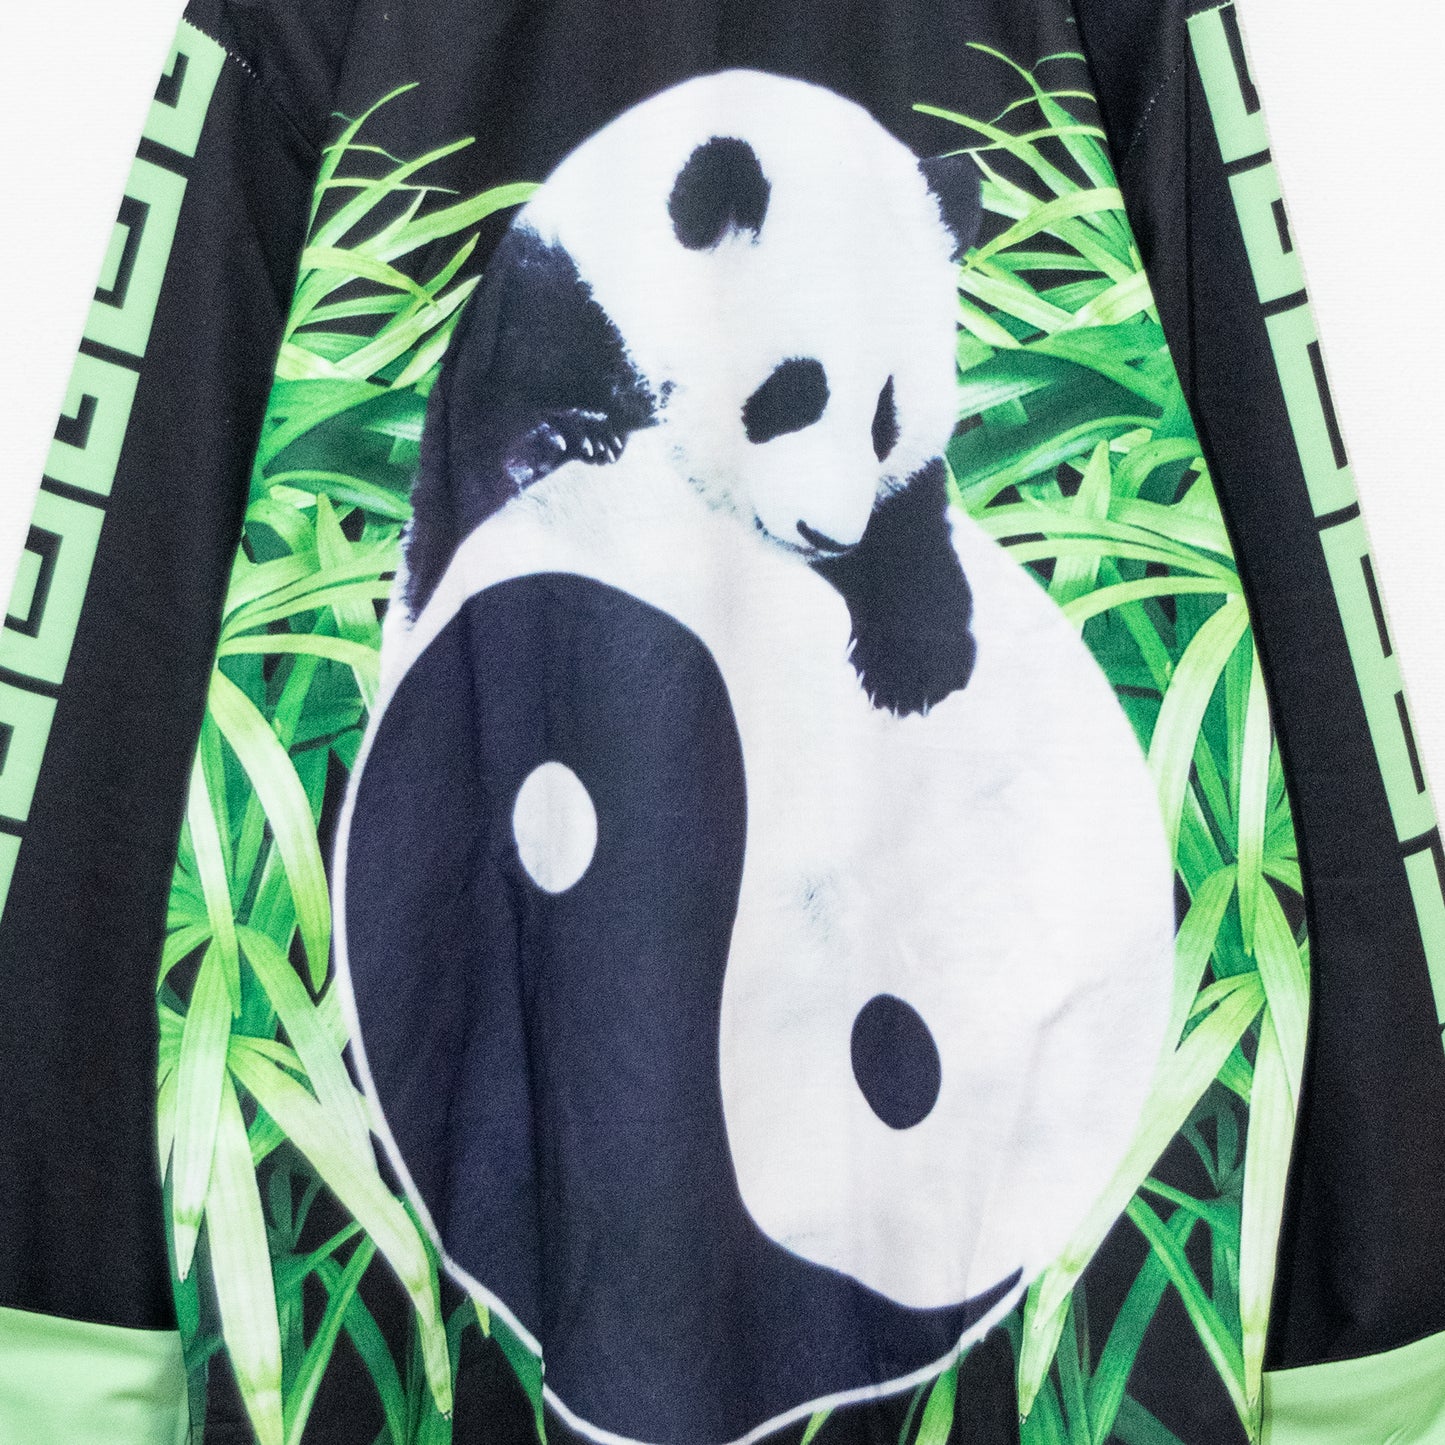 ACDC RAG Printed Light Jacket Panda Black